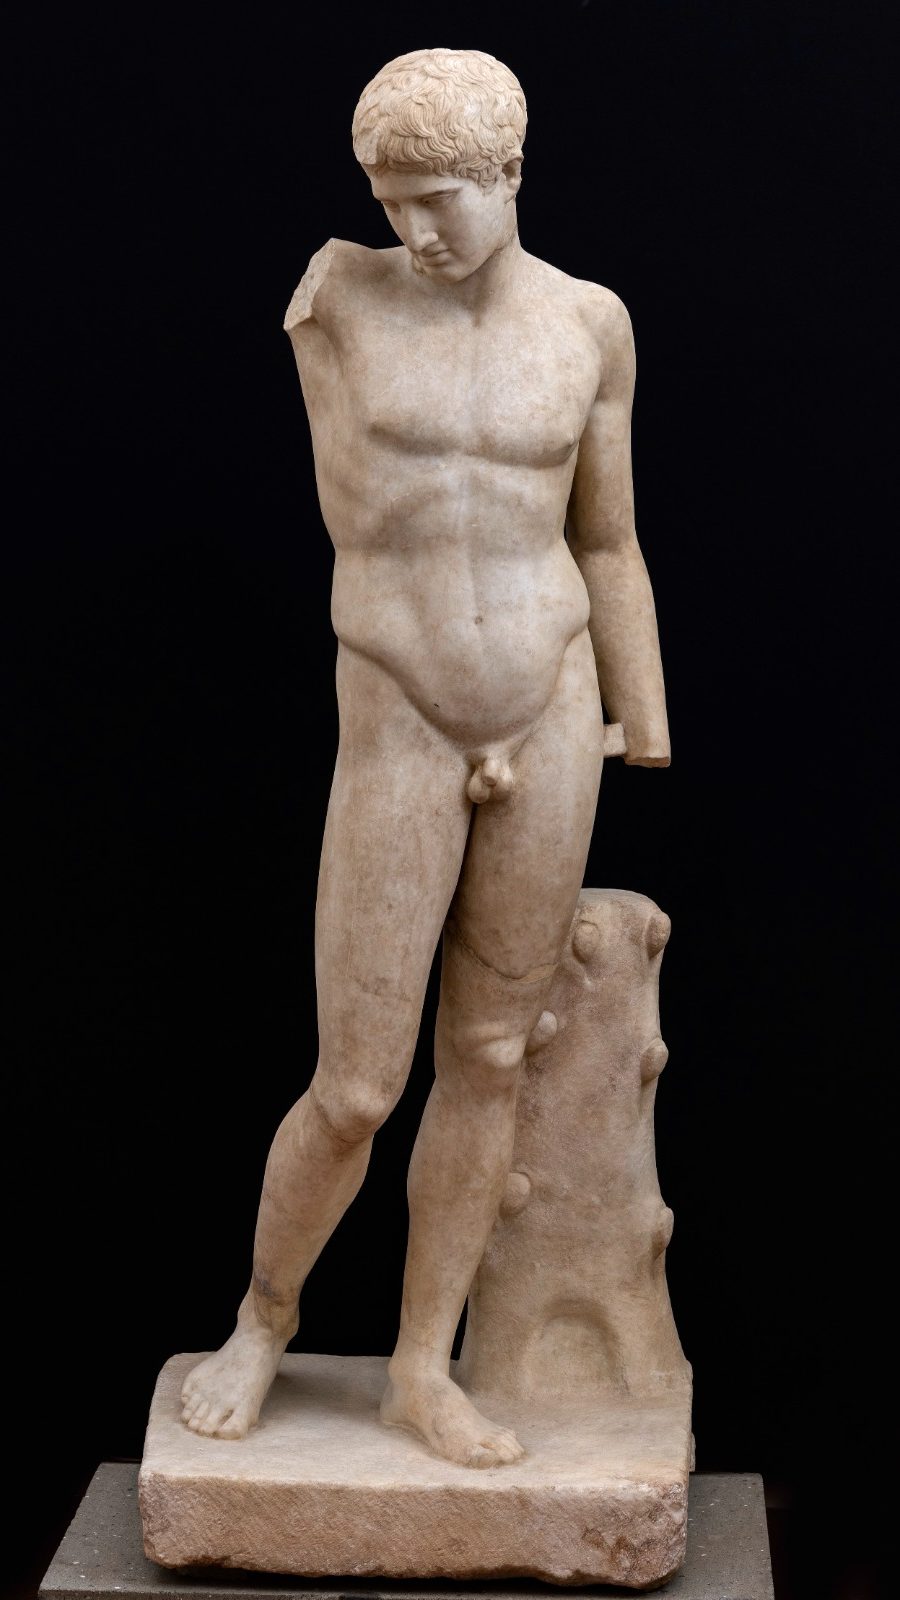 Statua di Efebo nudo tipo Westmacott, Marmo, inv. 36420,
Castelgandolfo, Antiquarium, Sala IV, Musei Vaticani